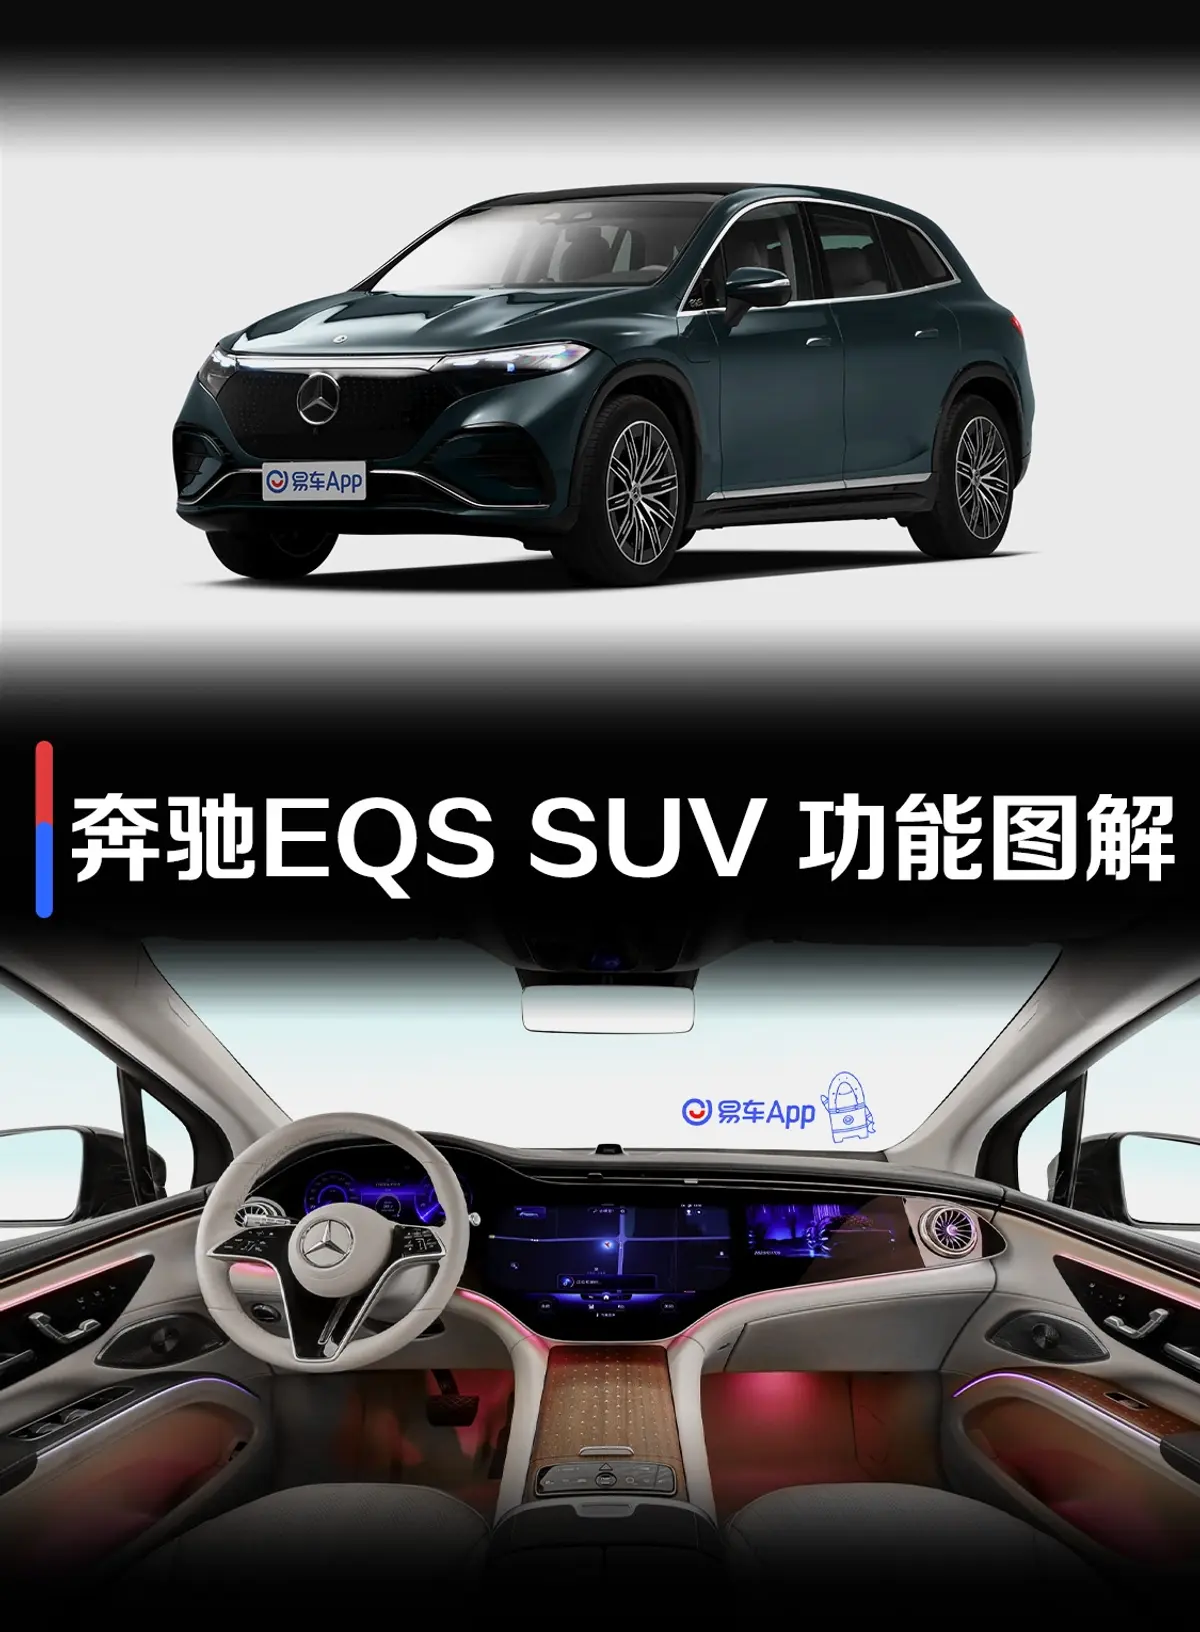 奔驰EQS SUV450 4MATIC 豪华版